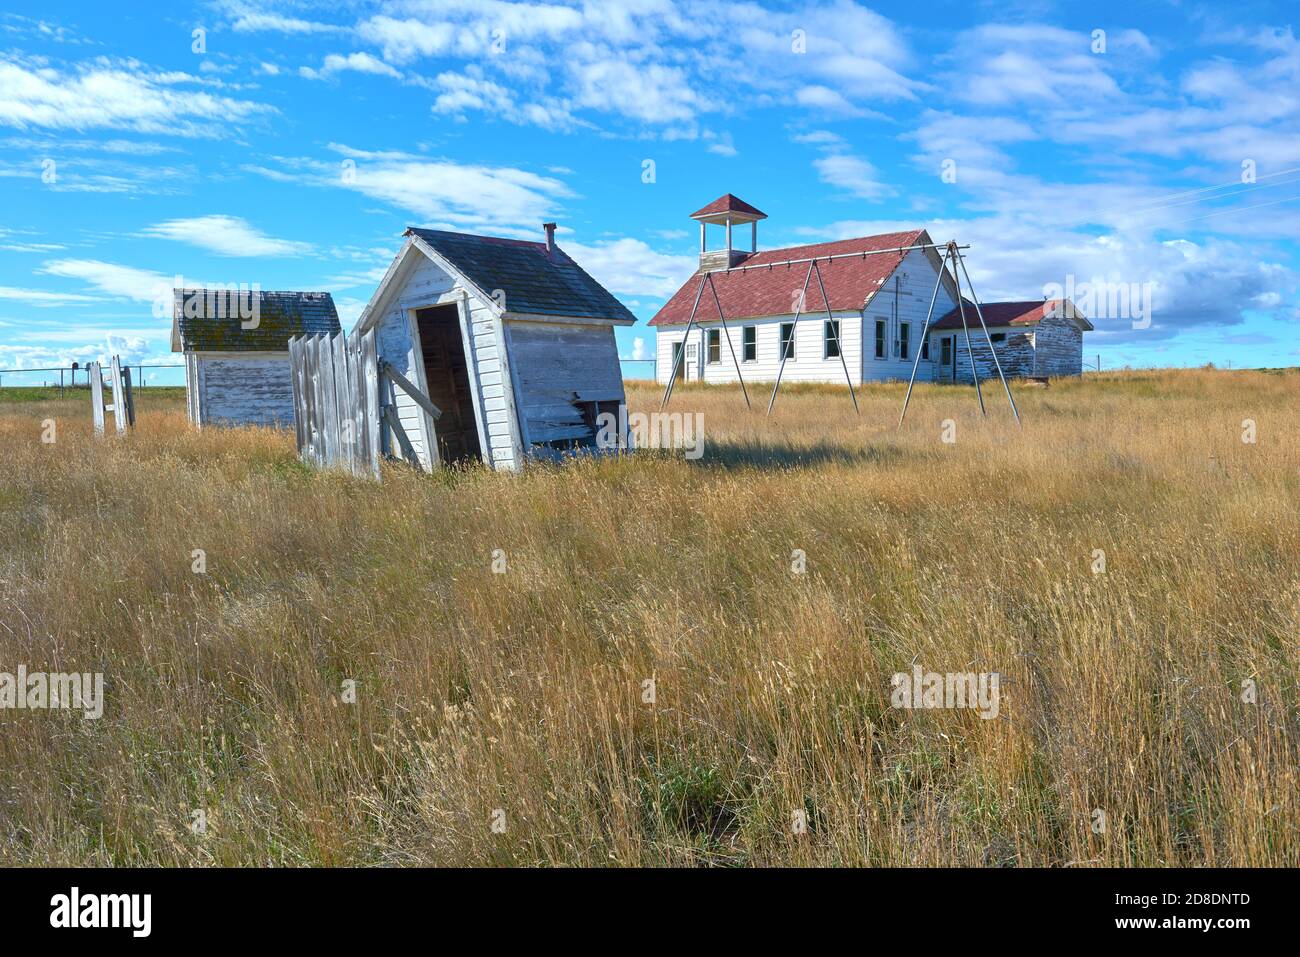 USA, MONTANA, TOOLE COUNTY. Abandoned rural schoolhouse  near Ledger on Ledger Road in Toole County Montana. Stock Photo